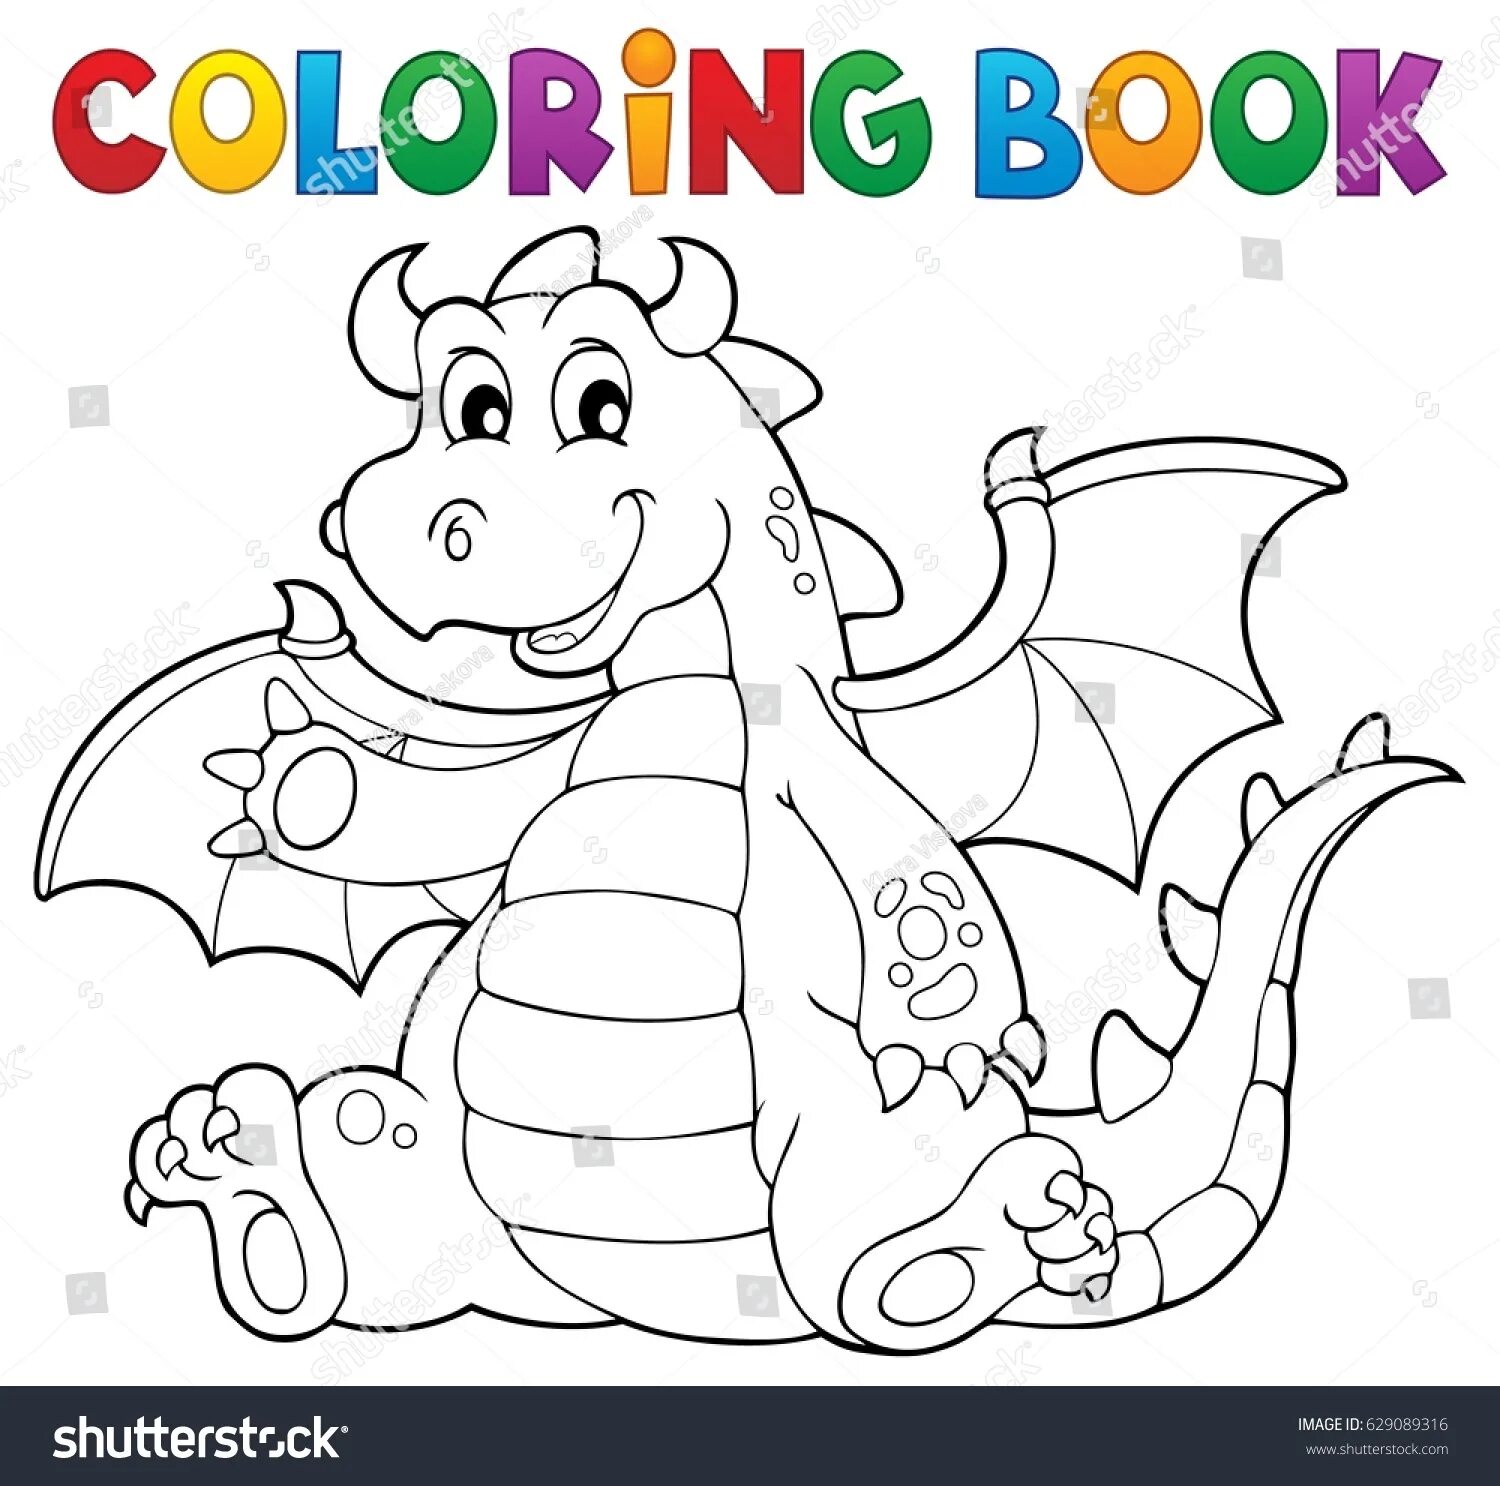 Amazing dragon coloring book